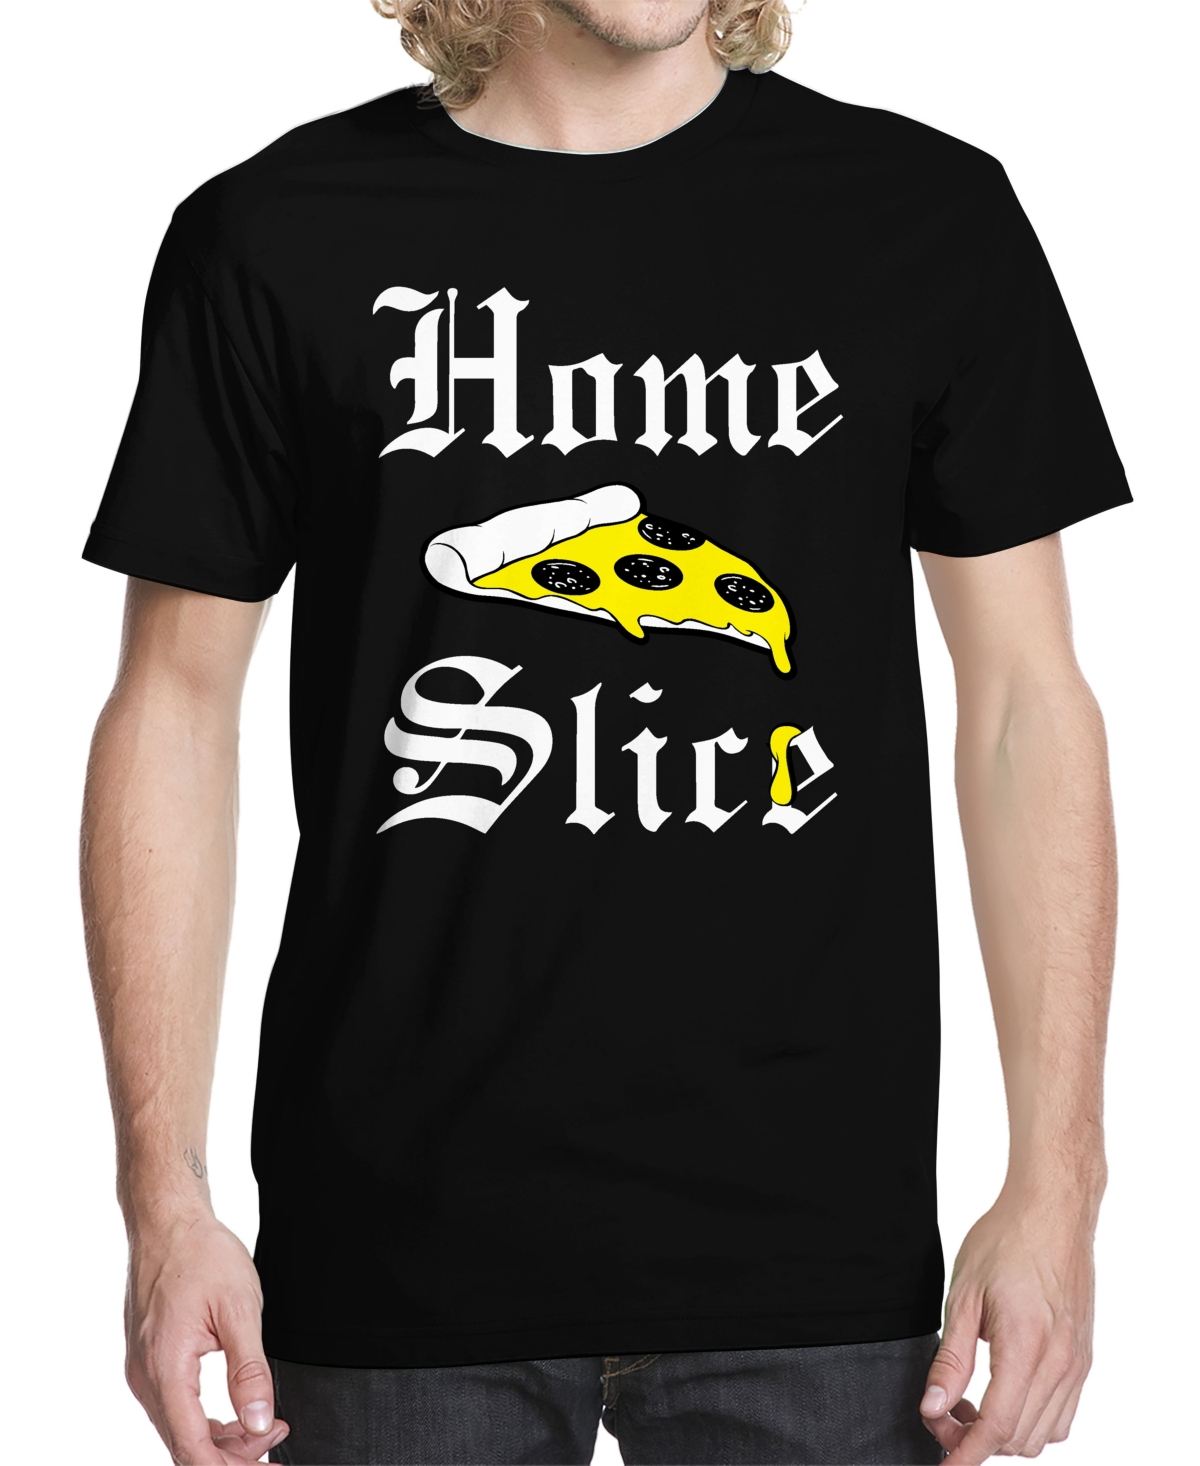 Buzz Shirts Men's Home Slice Graphic T-shirt